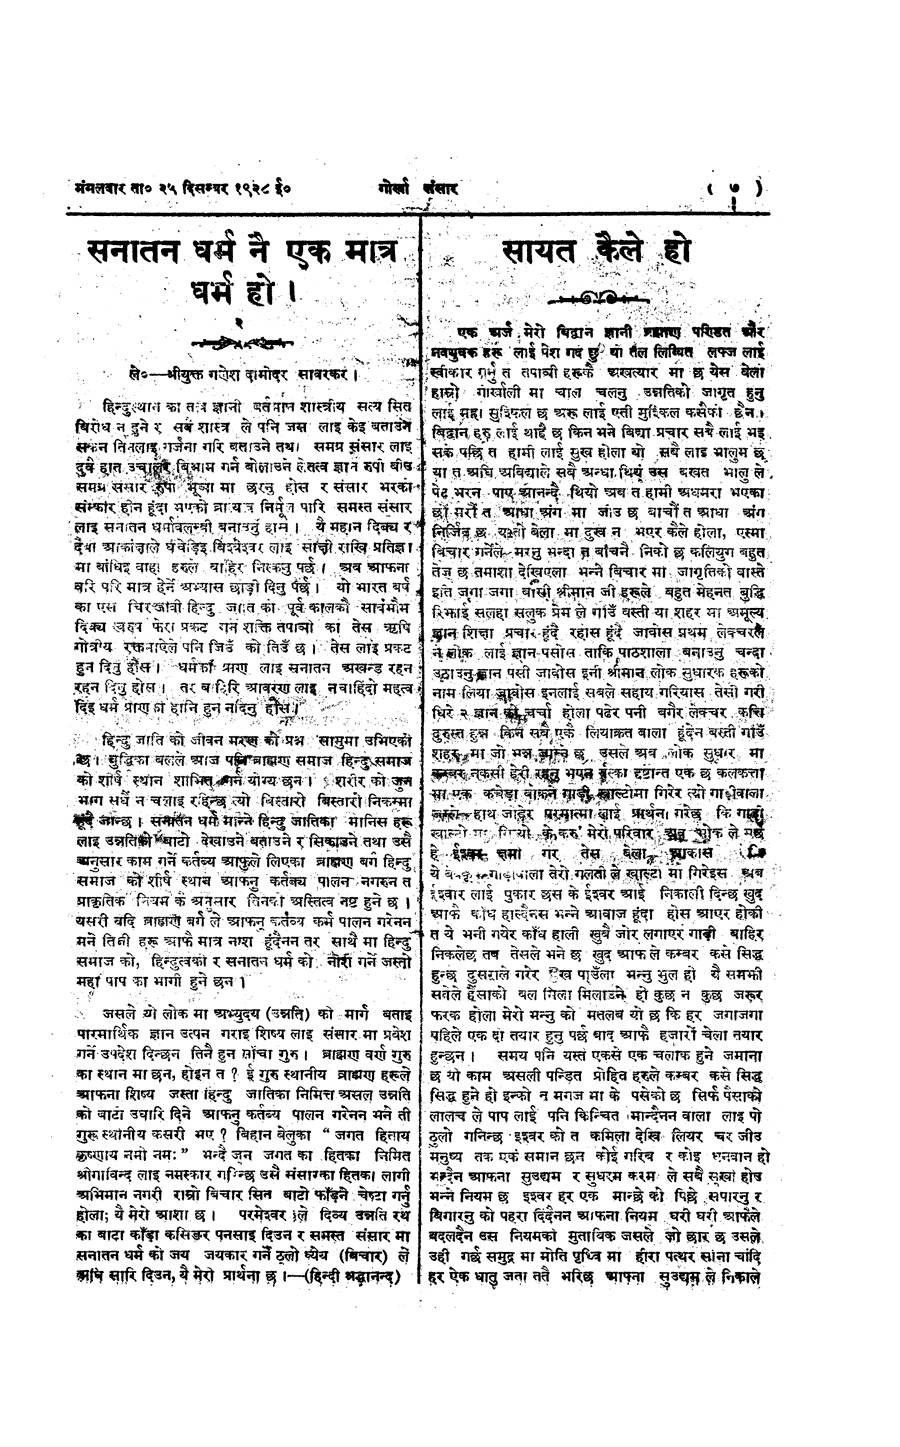 Gorkha Sansar, 25 Dec 1928, page 7